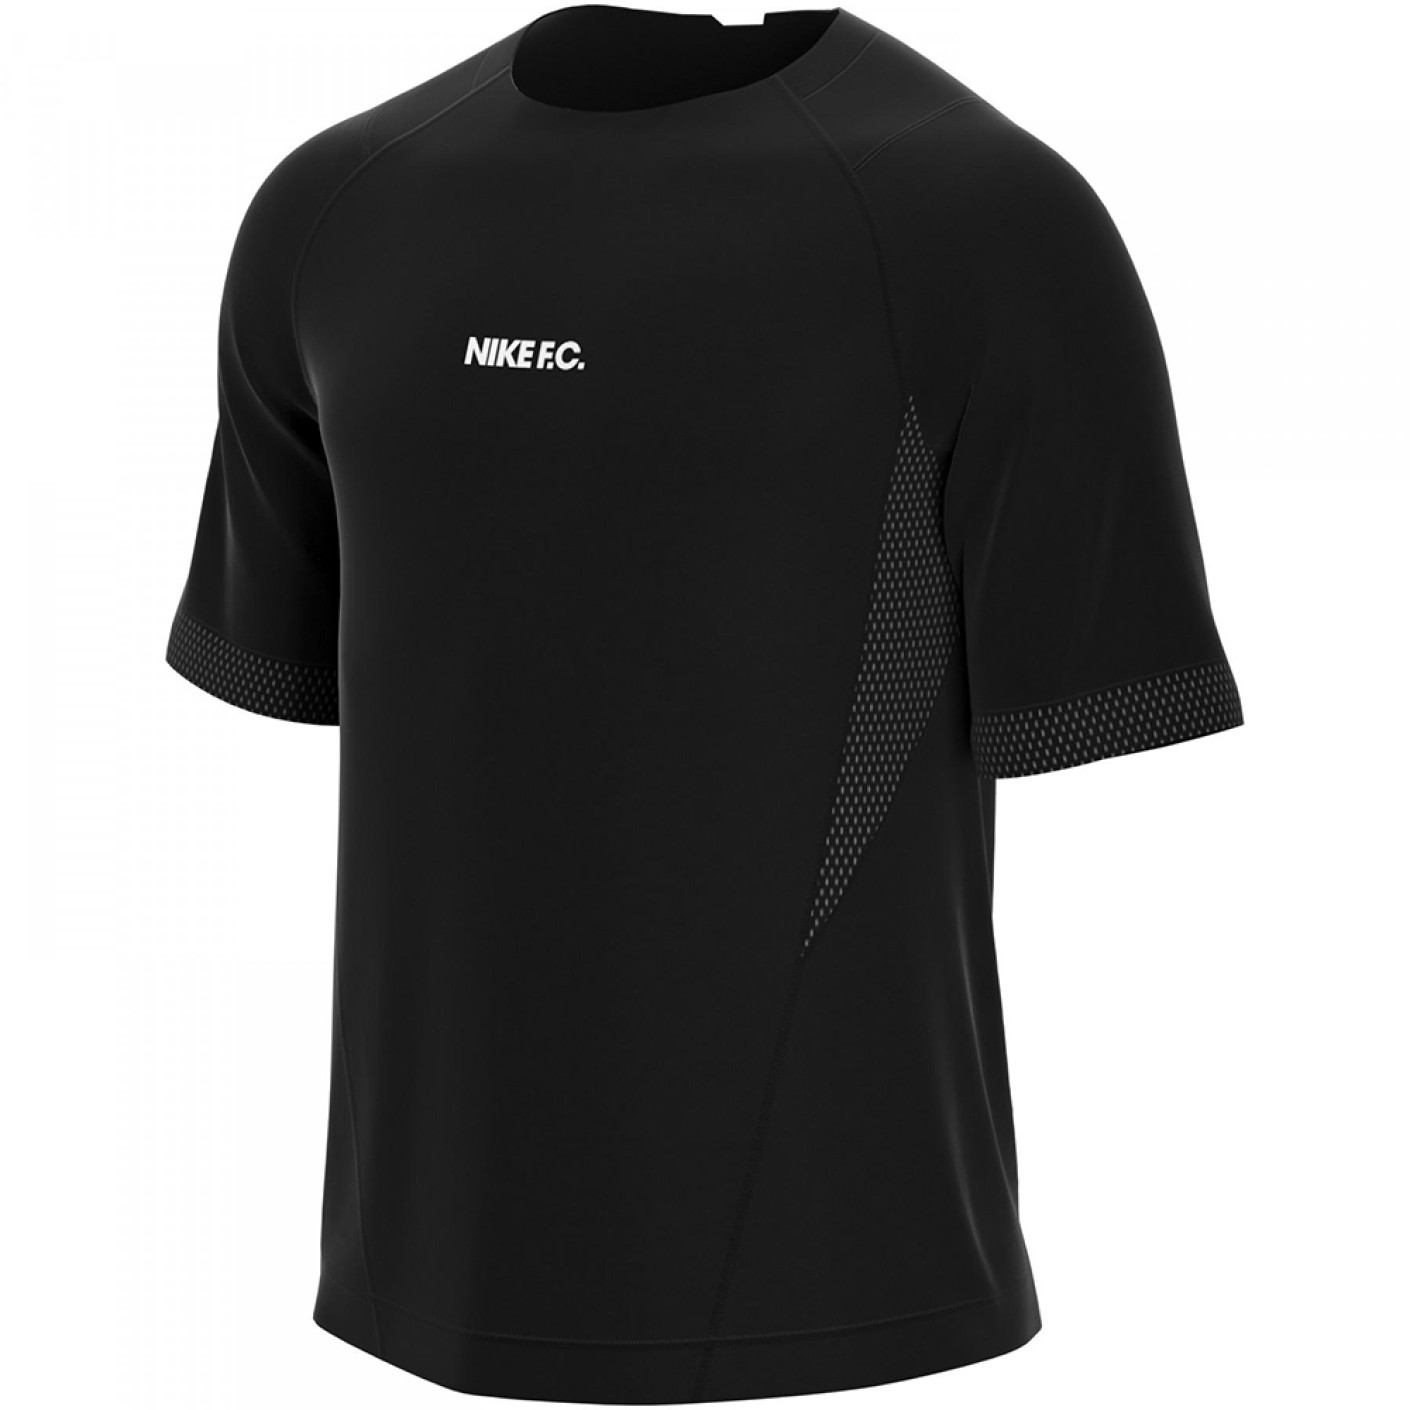 Nike F.C. Elite Training Shirt Black White